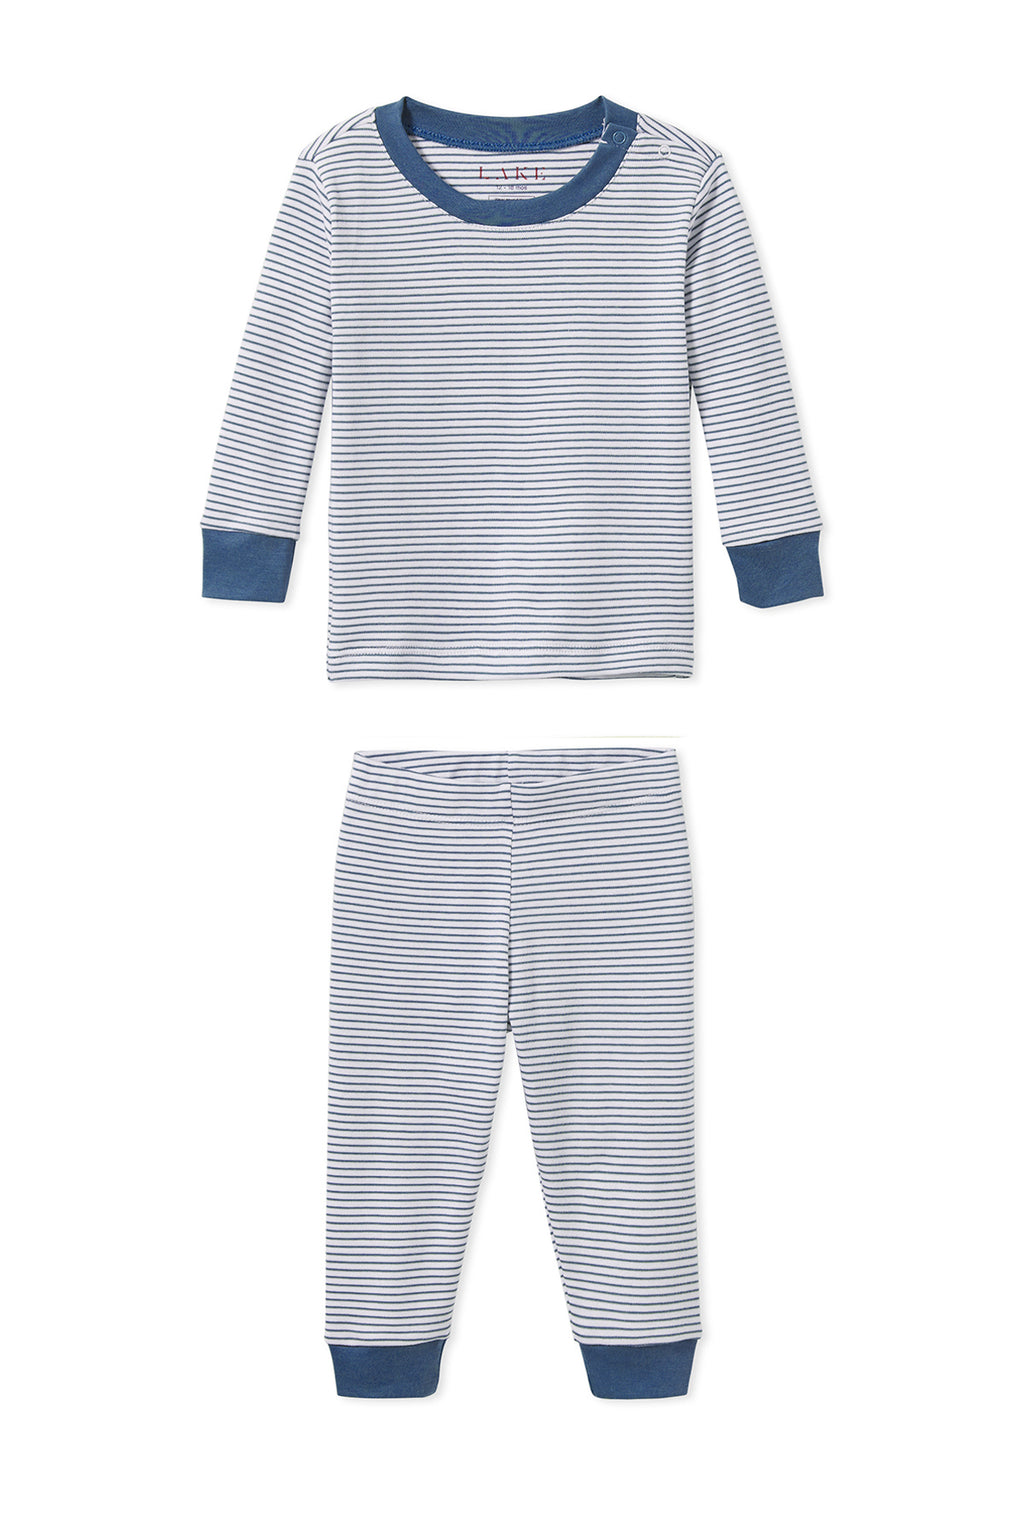 LAKE | Baby | Pima Cotton Pajamas | Classic Navy Baby Long-Long Set